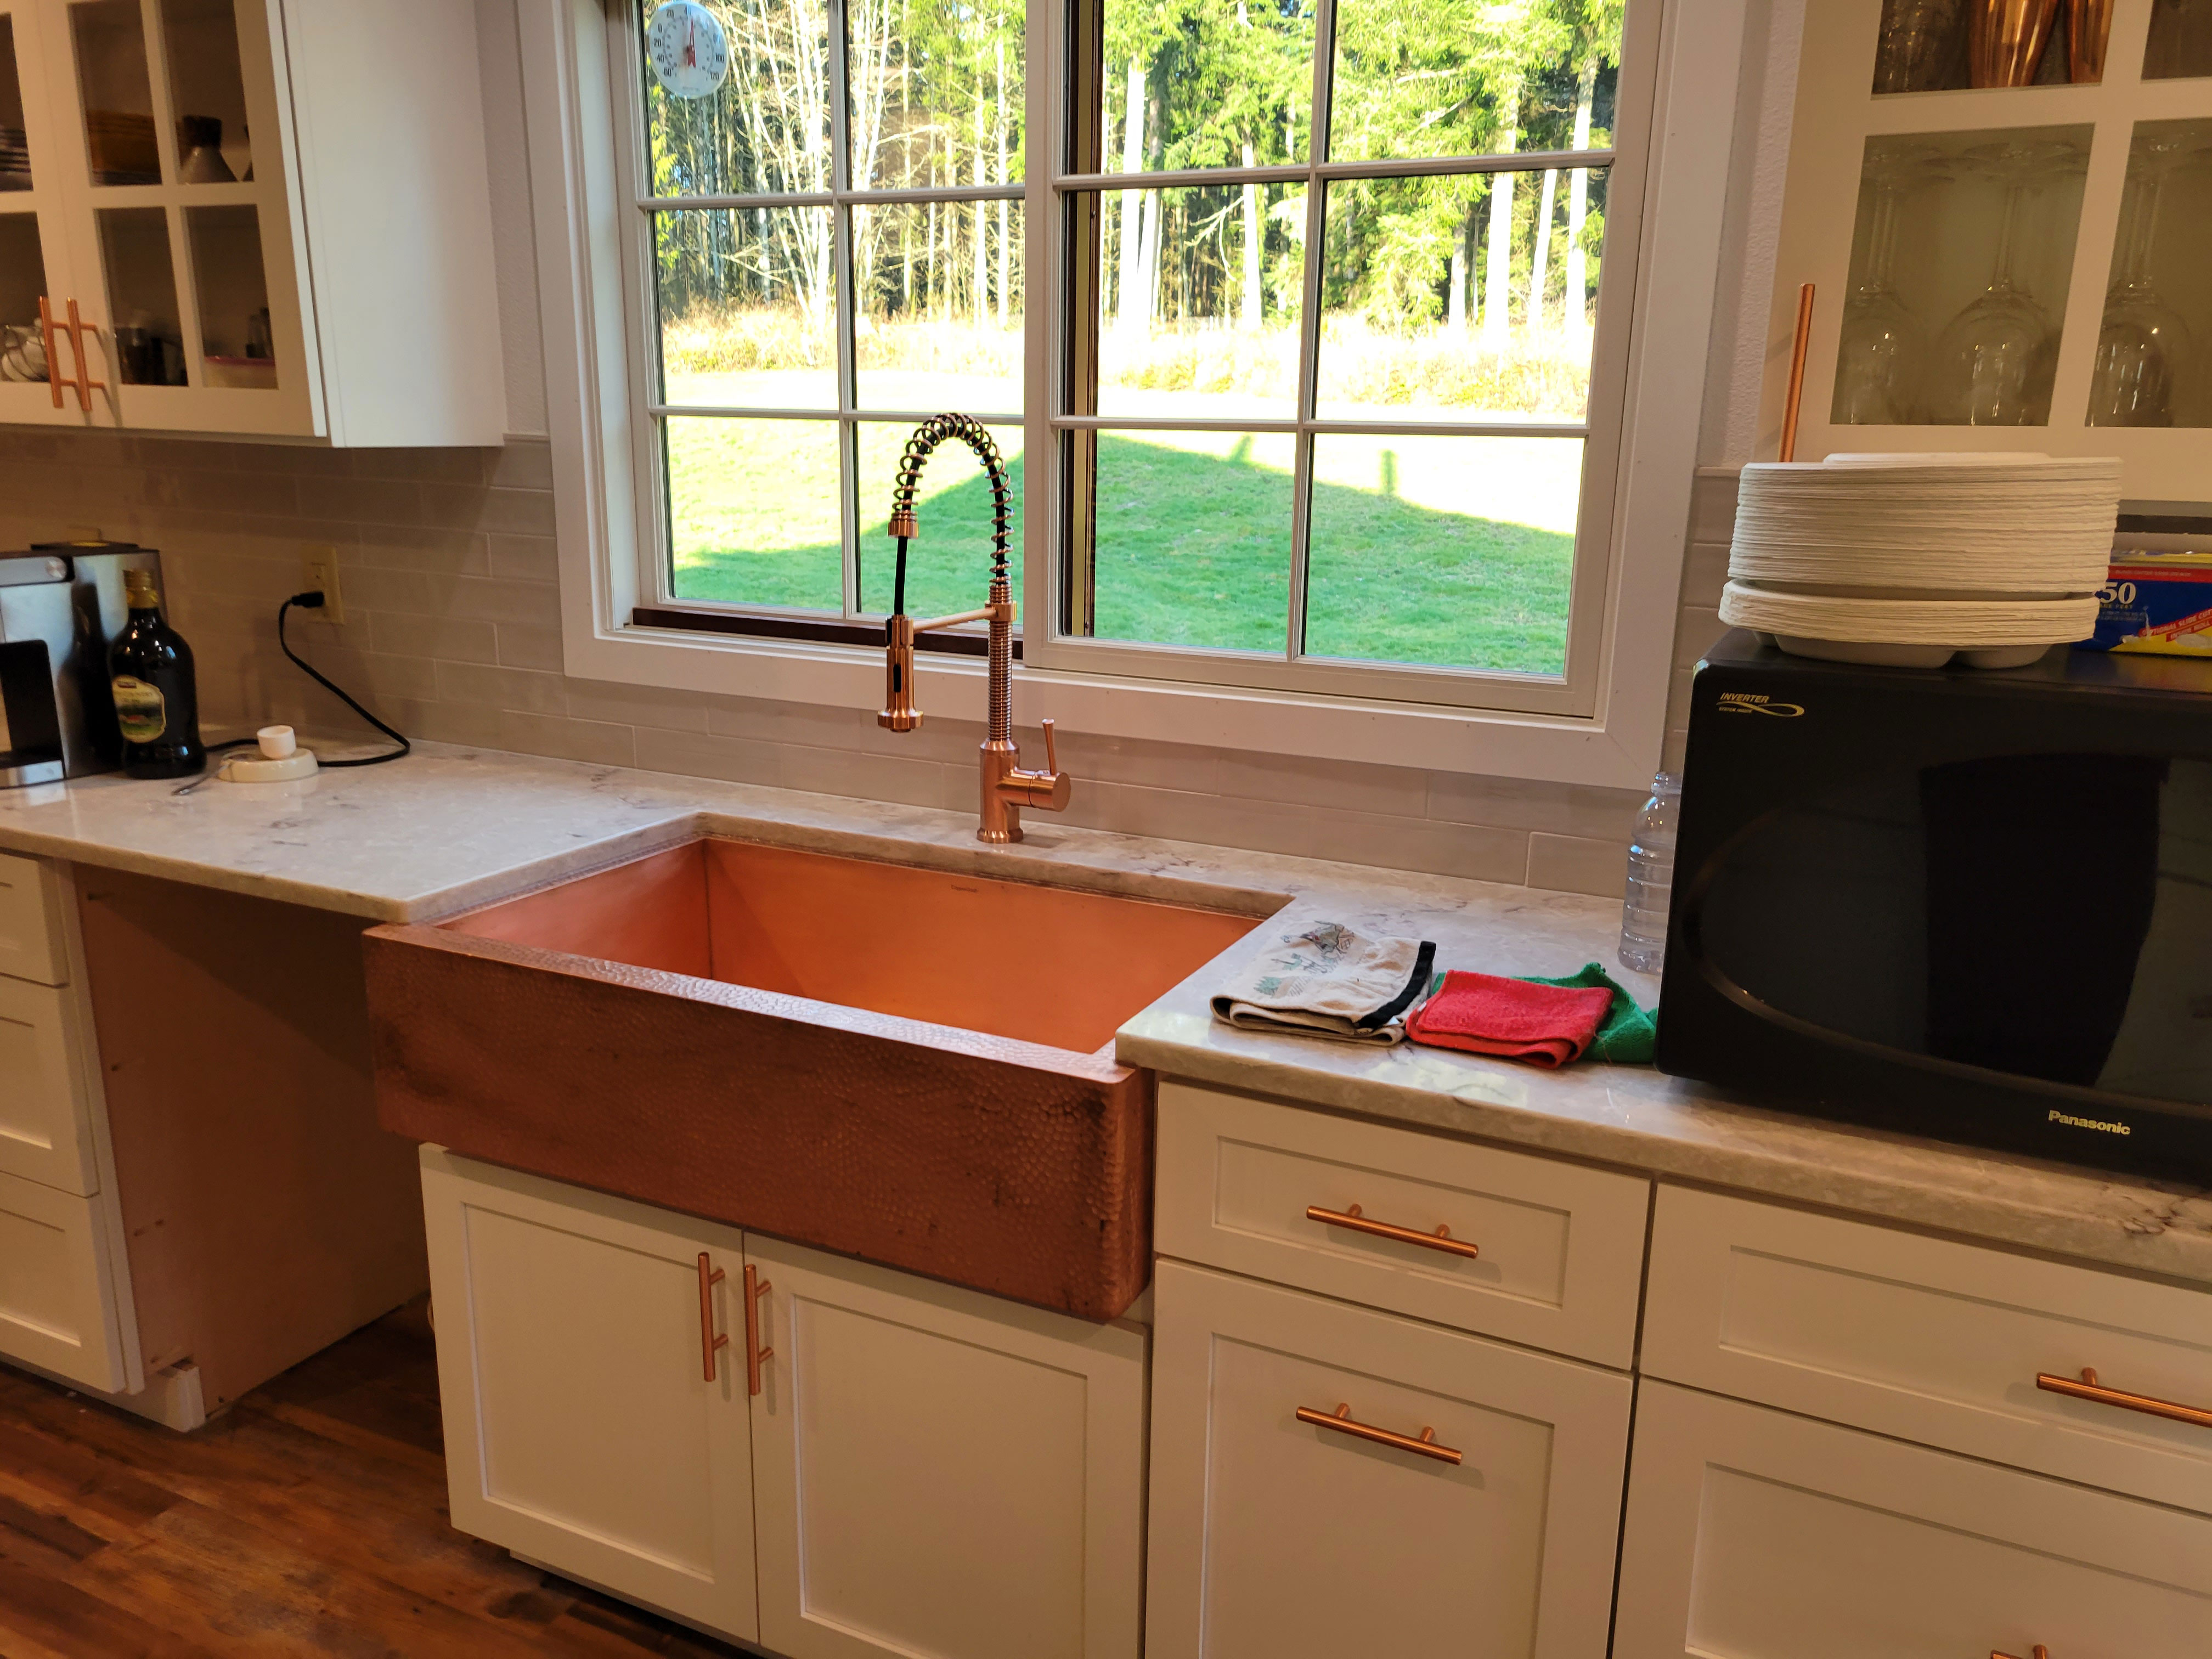 Beautifull kitchen design inspiring kitchen sink idea with white cabinets, marble countertops and rustic brick backsplash